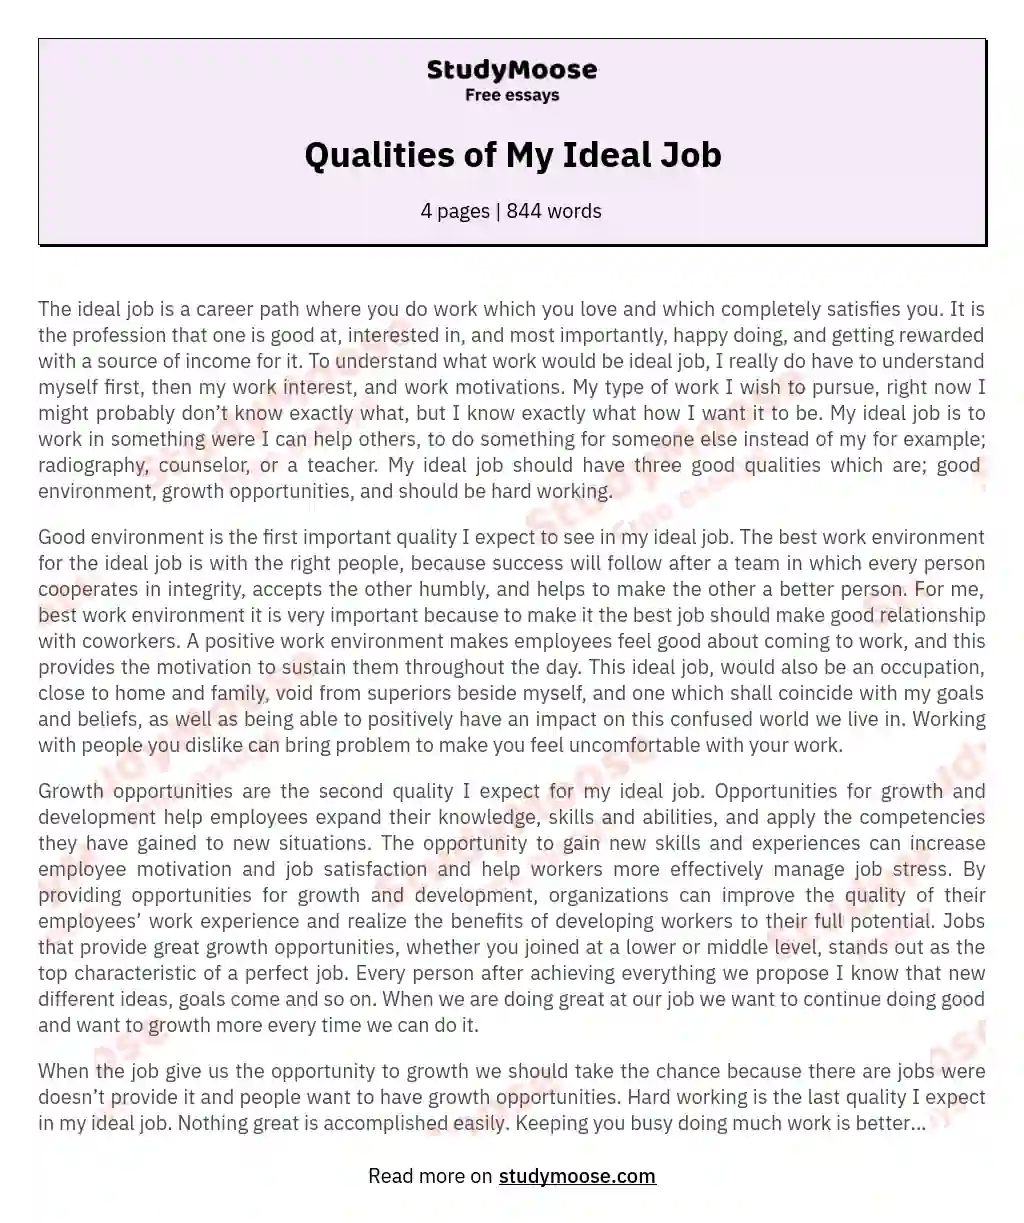 Qualities of My Ideal Job essay